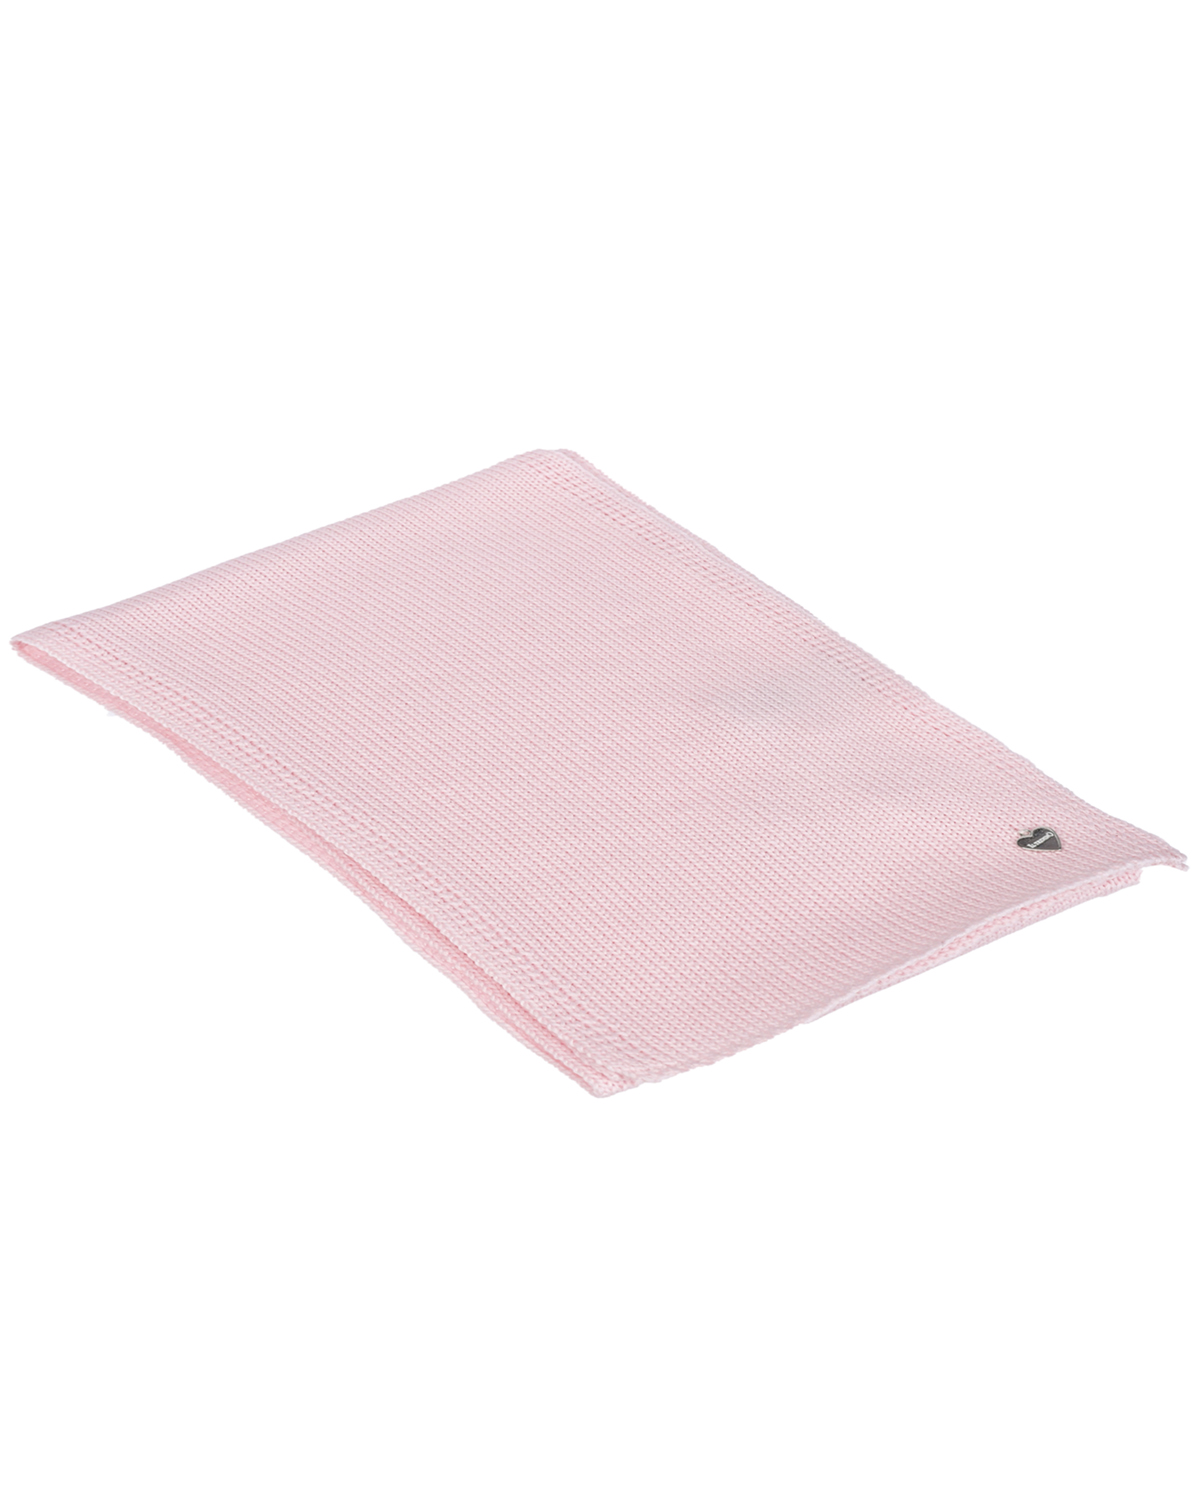 Нежно-розовый шарф из шерсти, 20х140 см Il Trenino детское, размер unica - фото 1